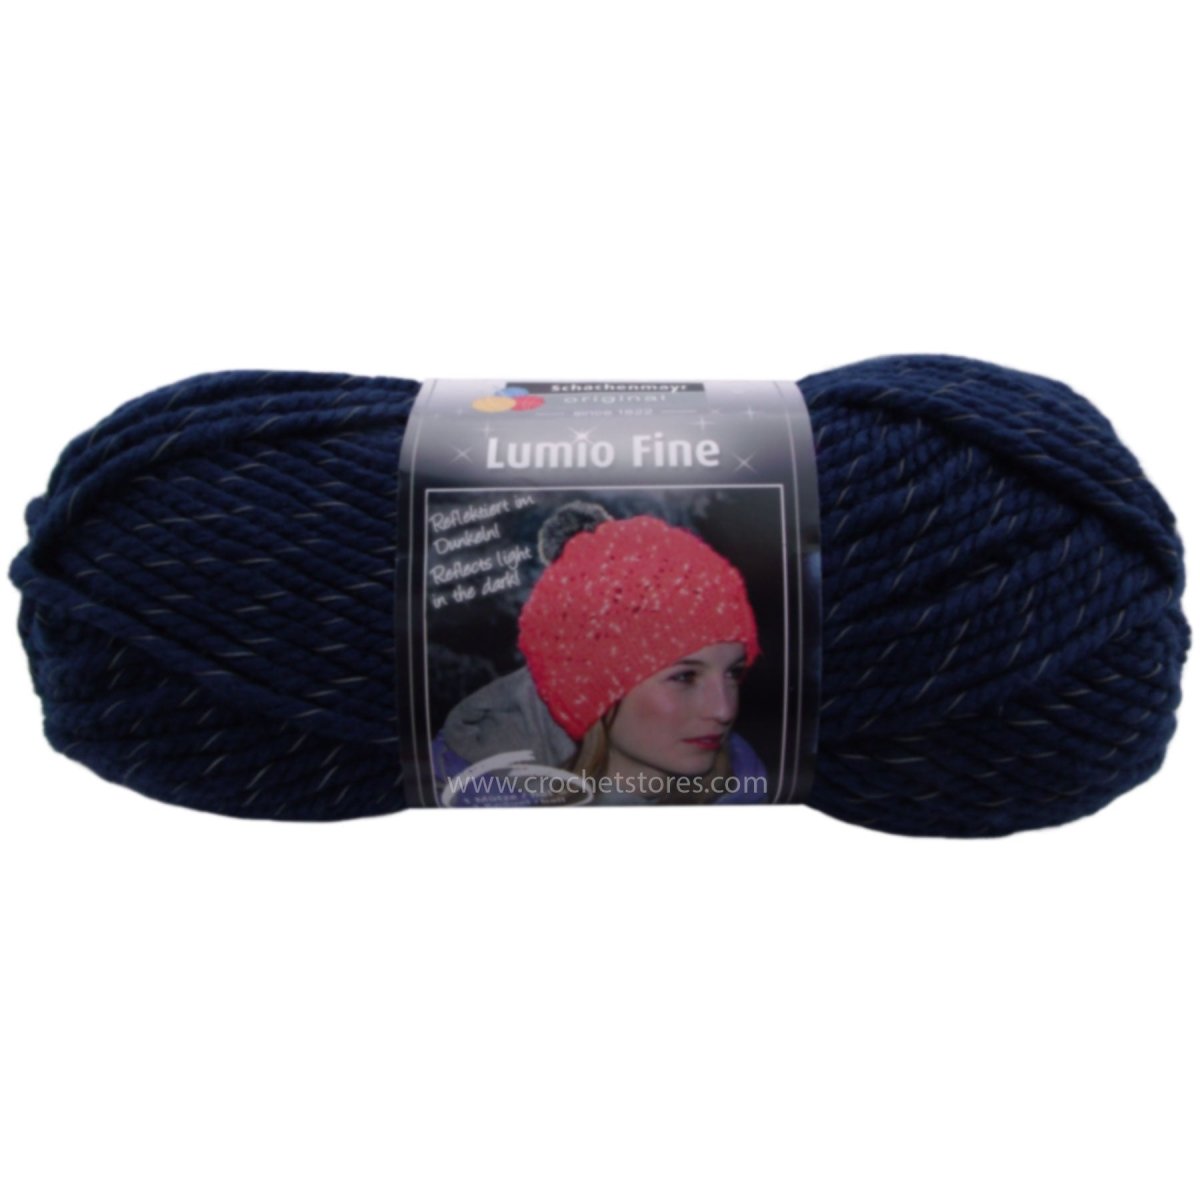 LUMIO FINE - Crochetstores9807557-1504053859053532